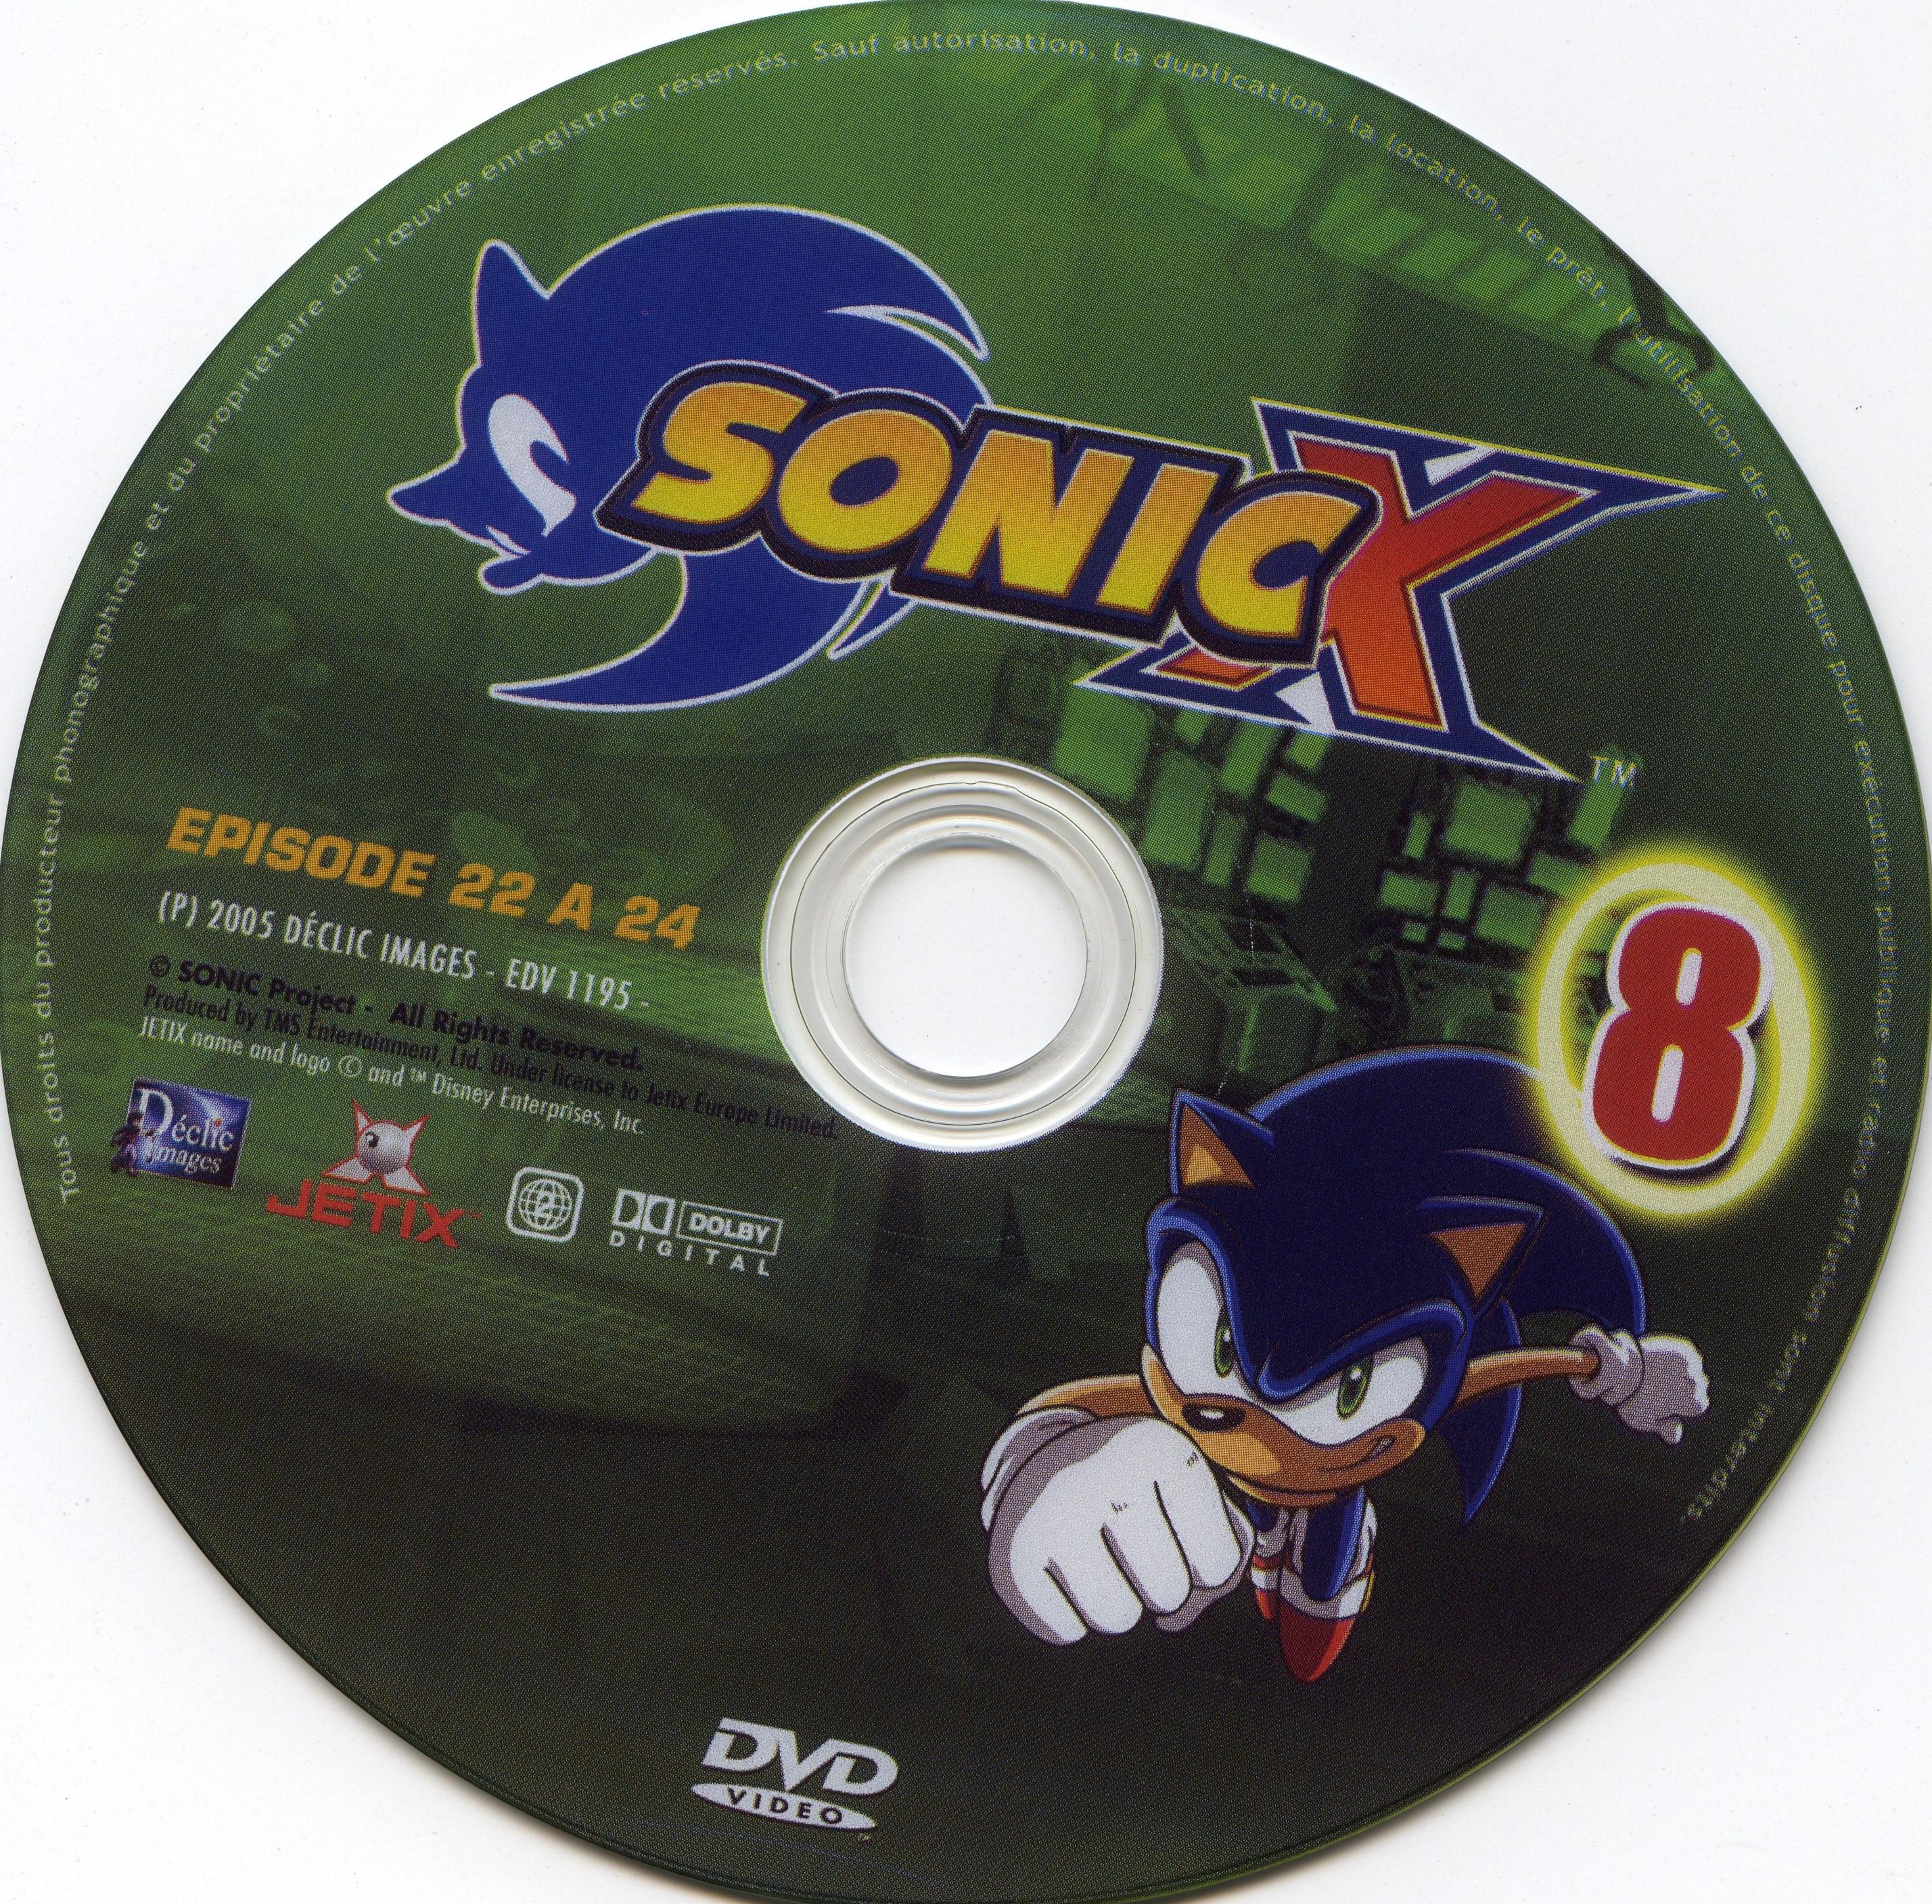 Sonic X vol 08